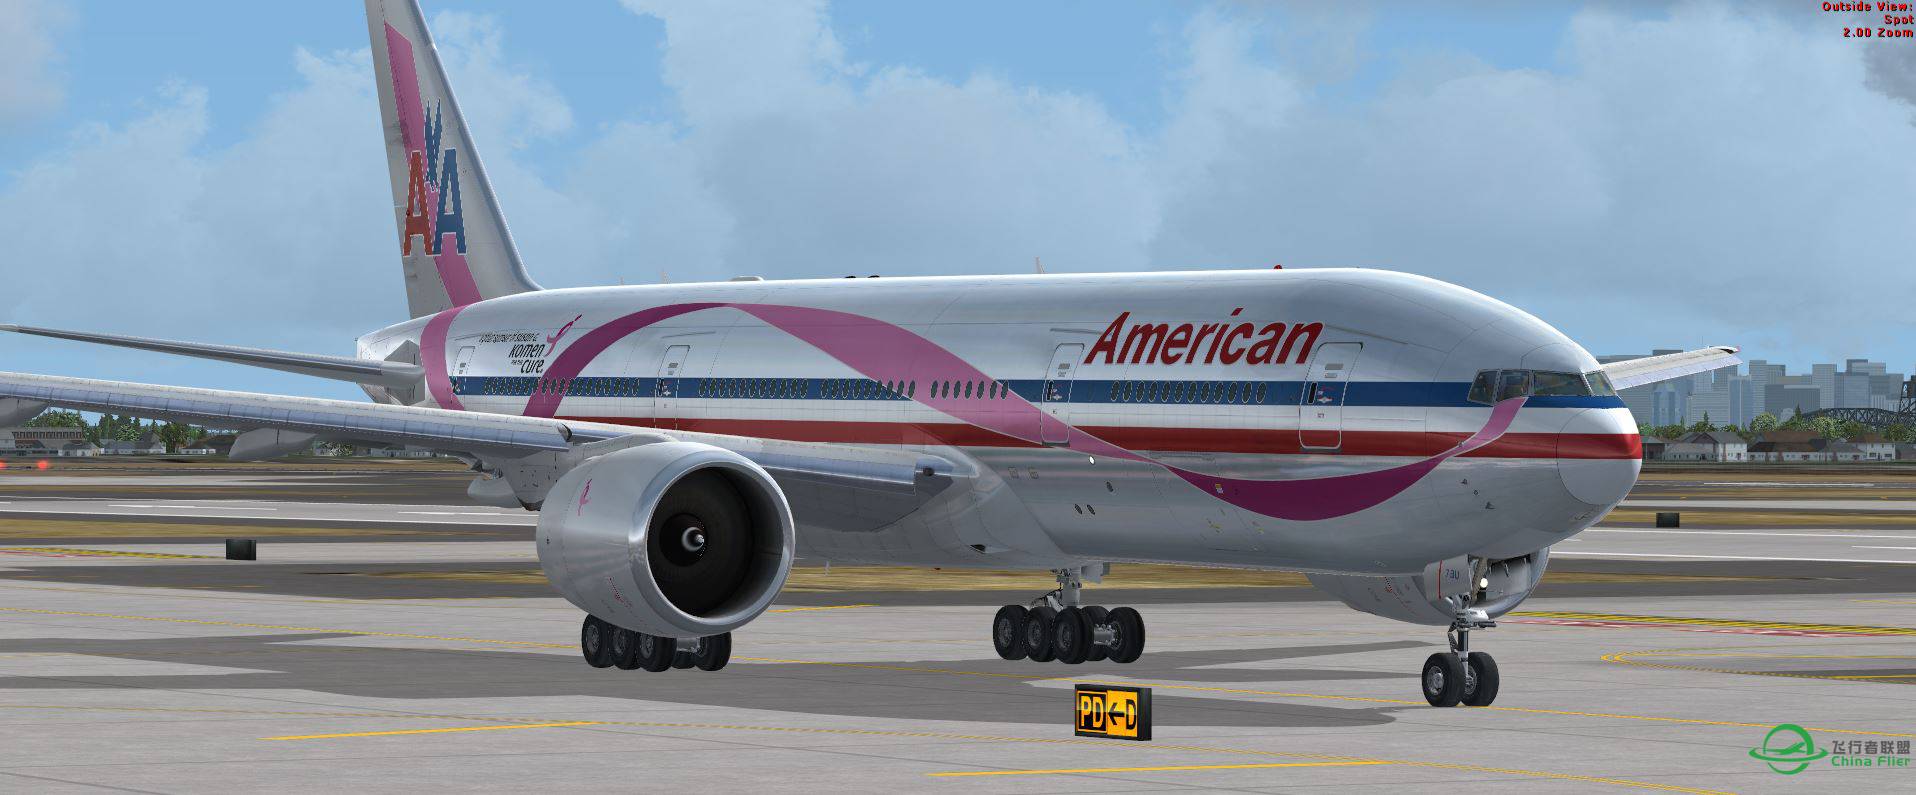 B777 American Airline-2706 